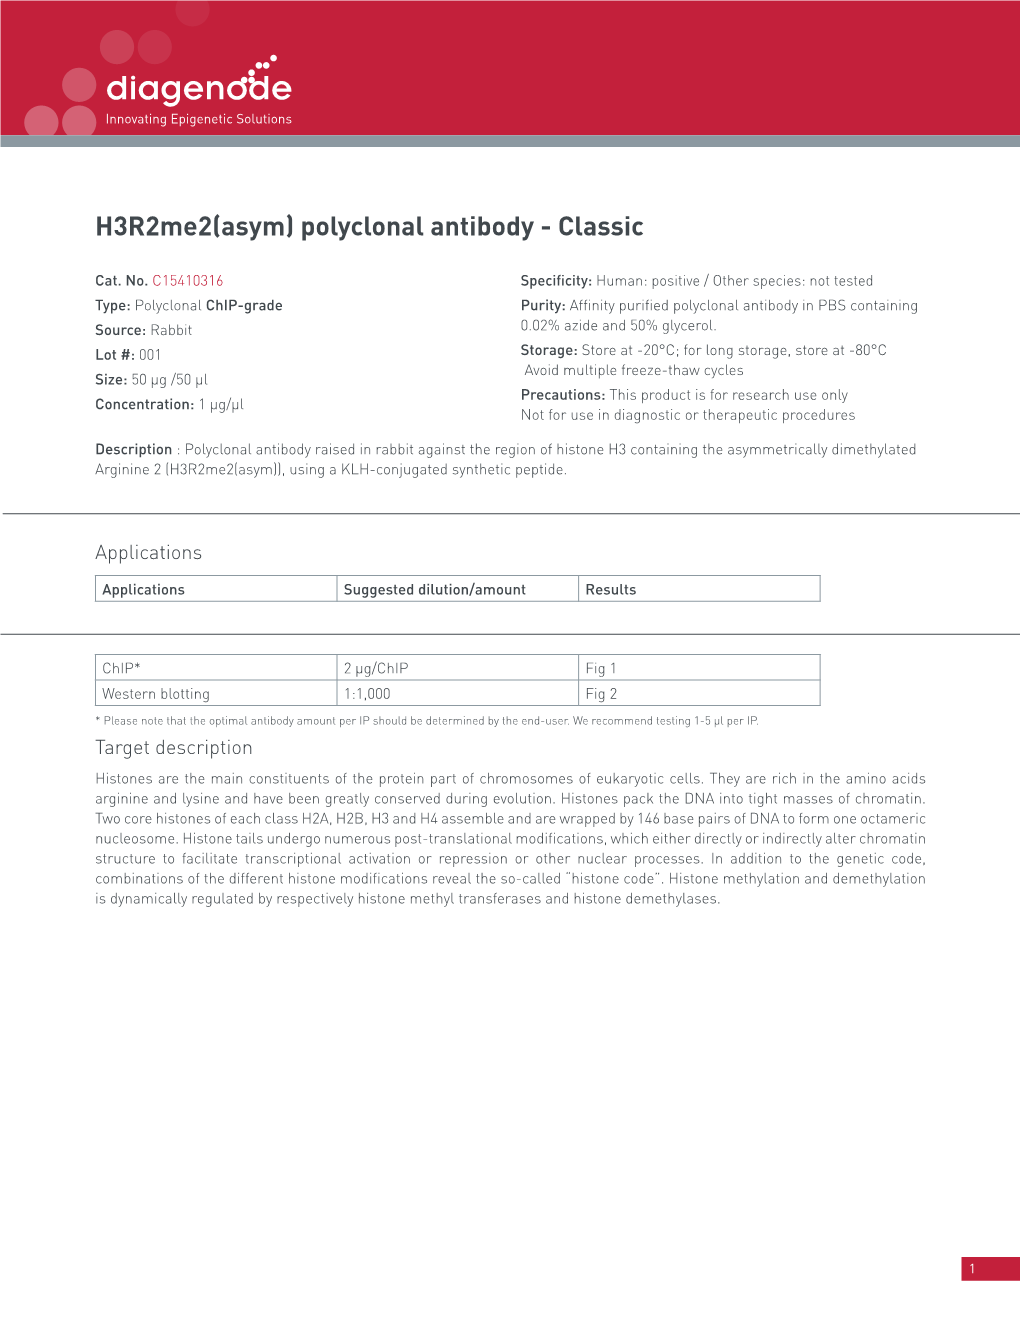 H3r2me2(Asym) Polyclonal Antibody - Classic